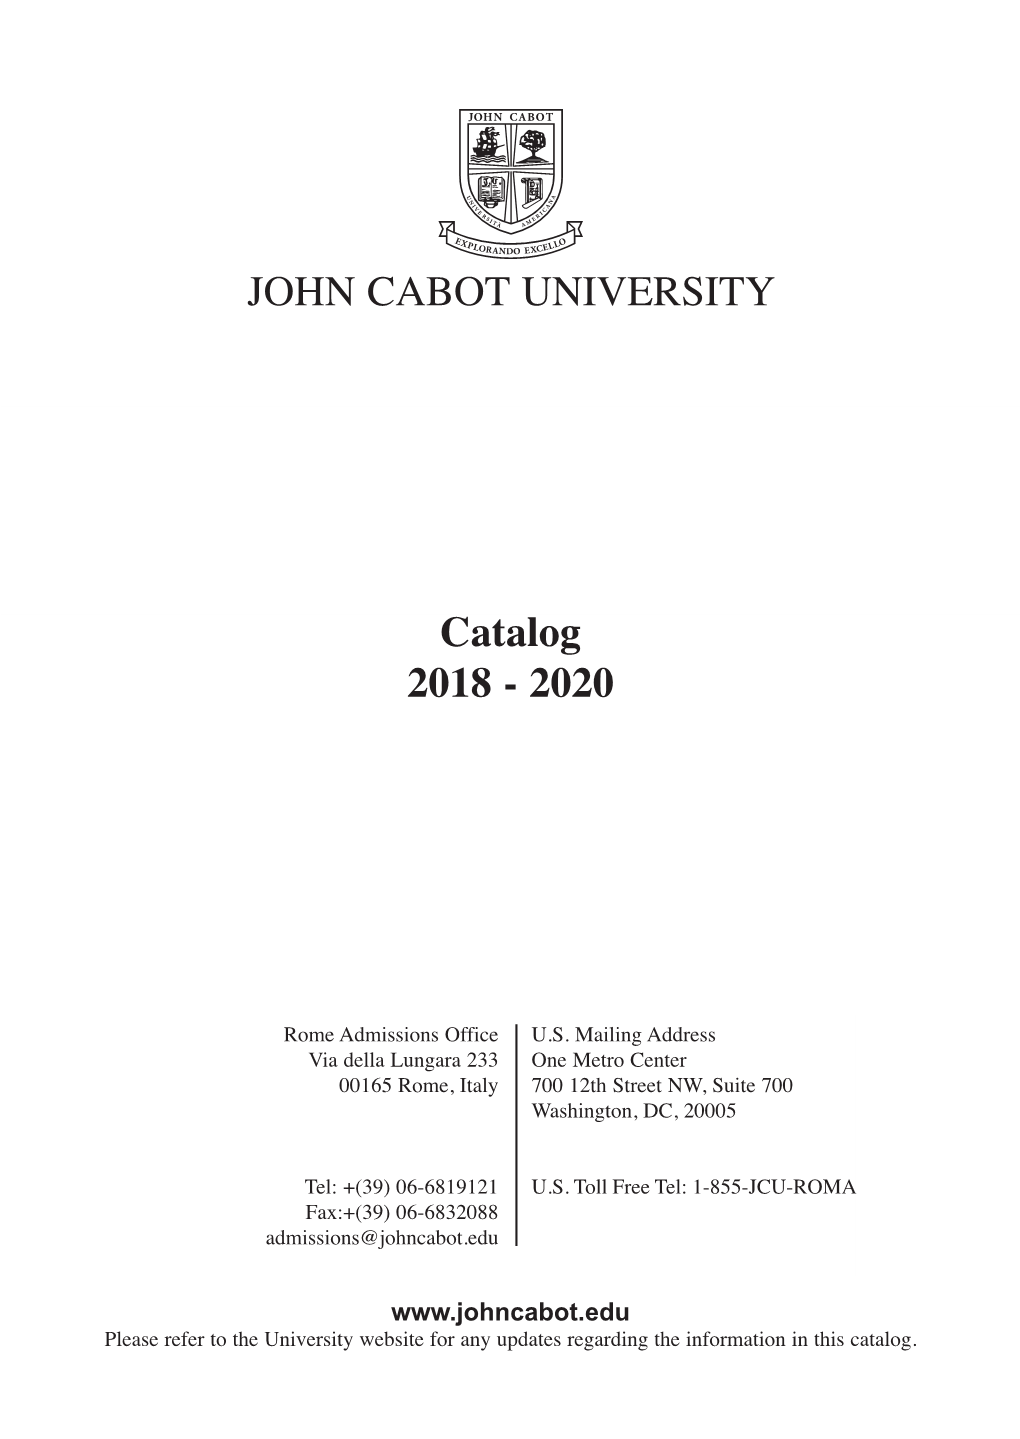 Catalog 2018 - 2020